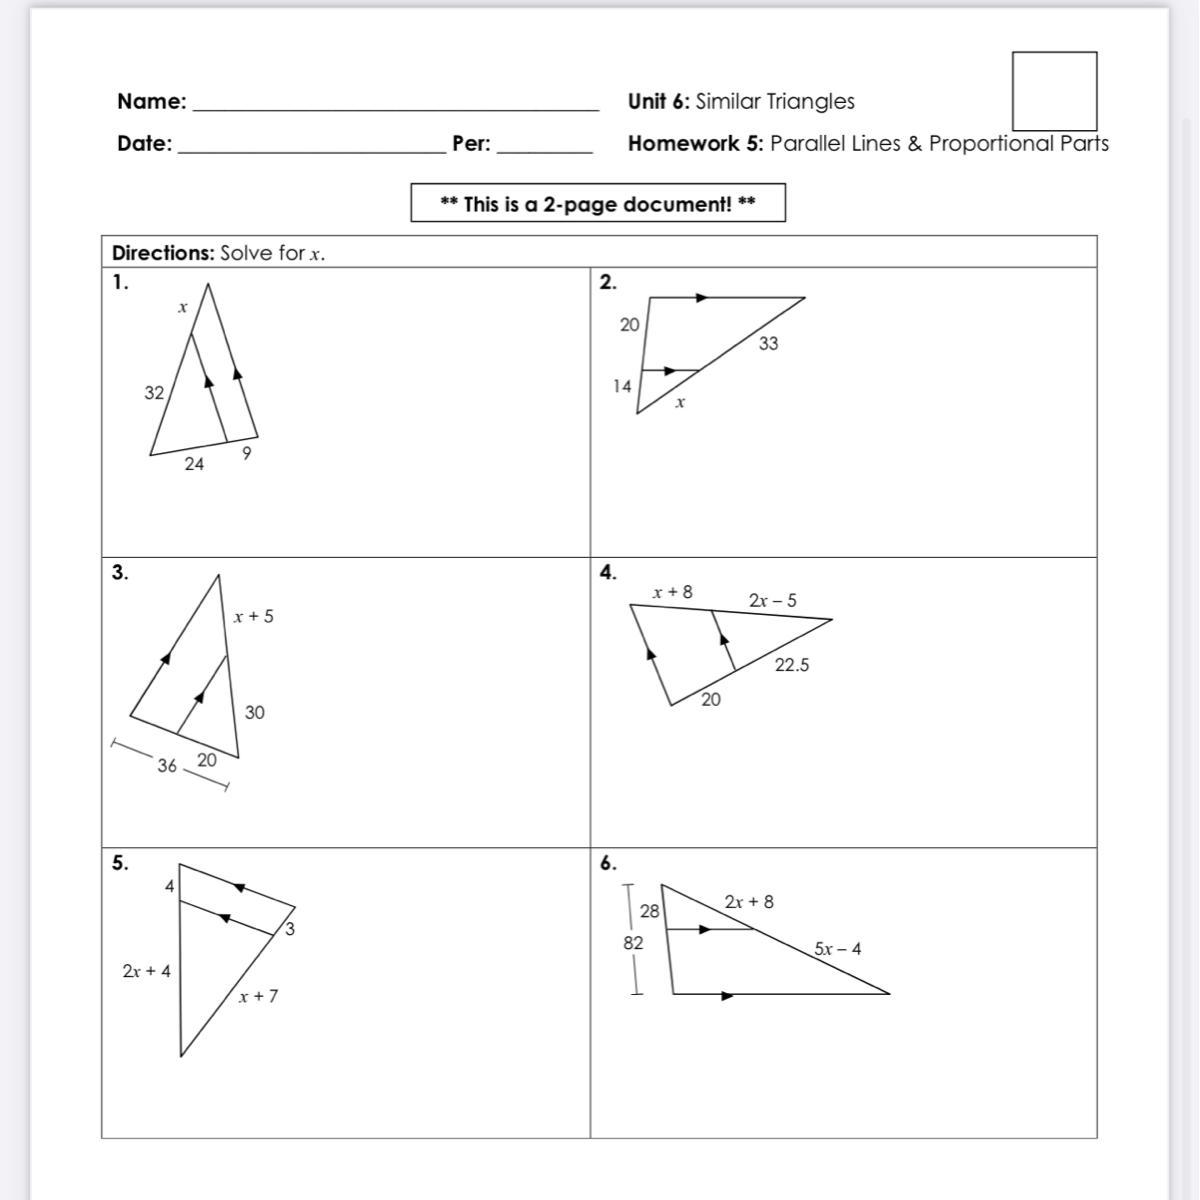 Unit 6 Similar Triangles Homework 5